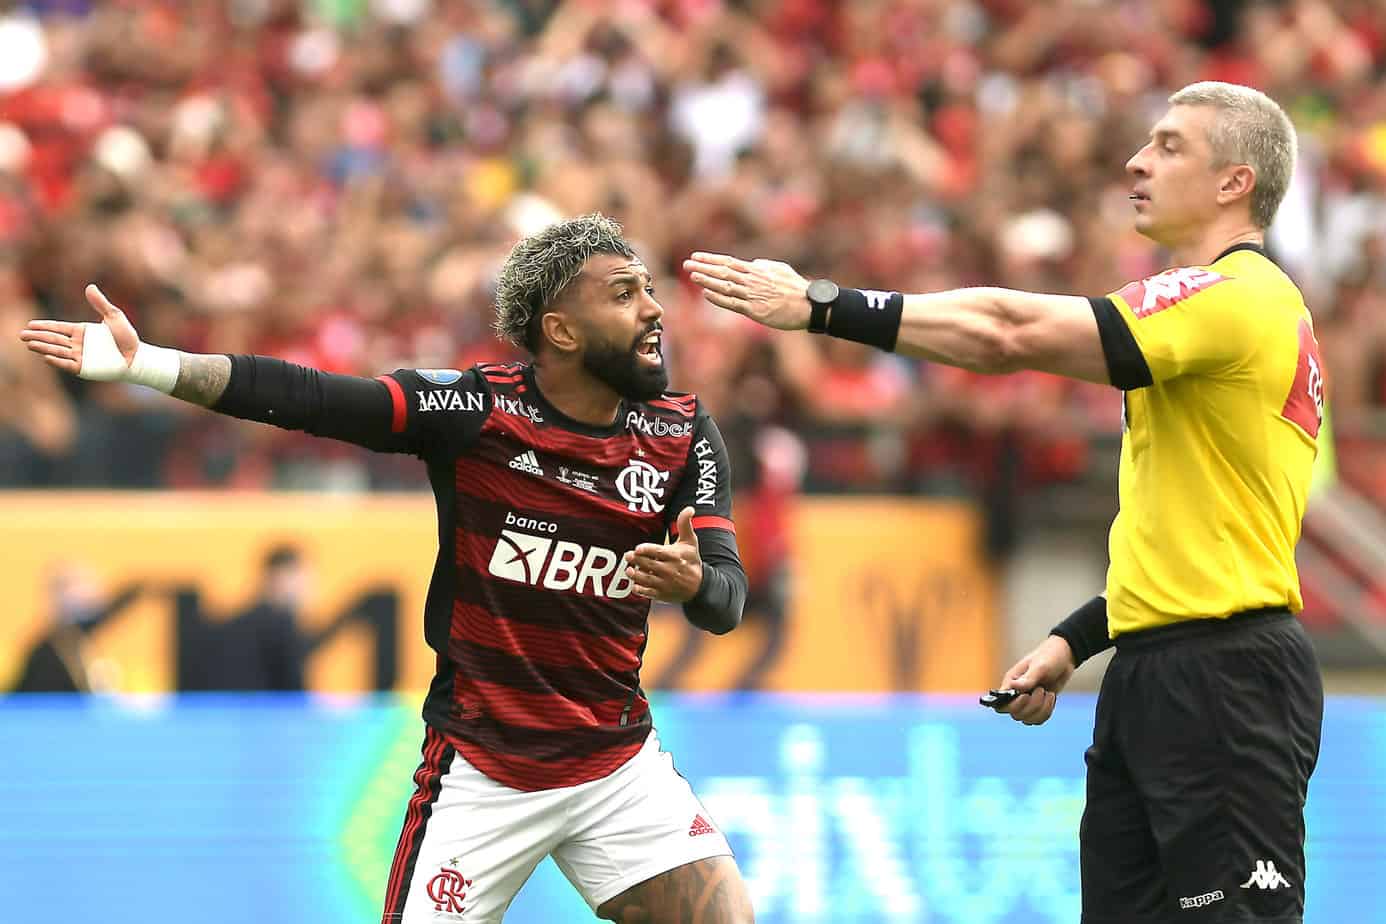 Flamengo vs. Atlético Mineiro – Betting Odds and Free Pick